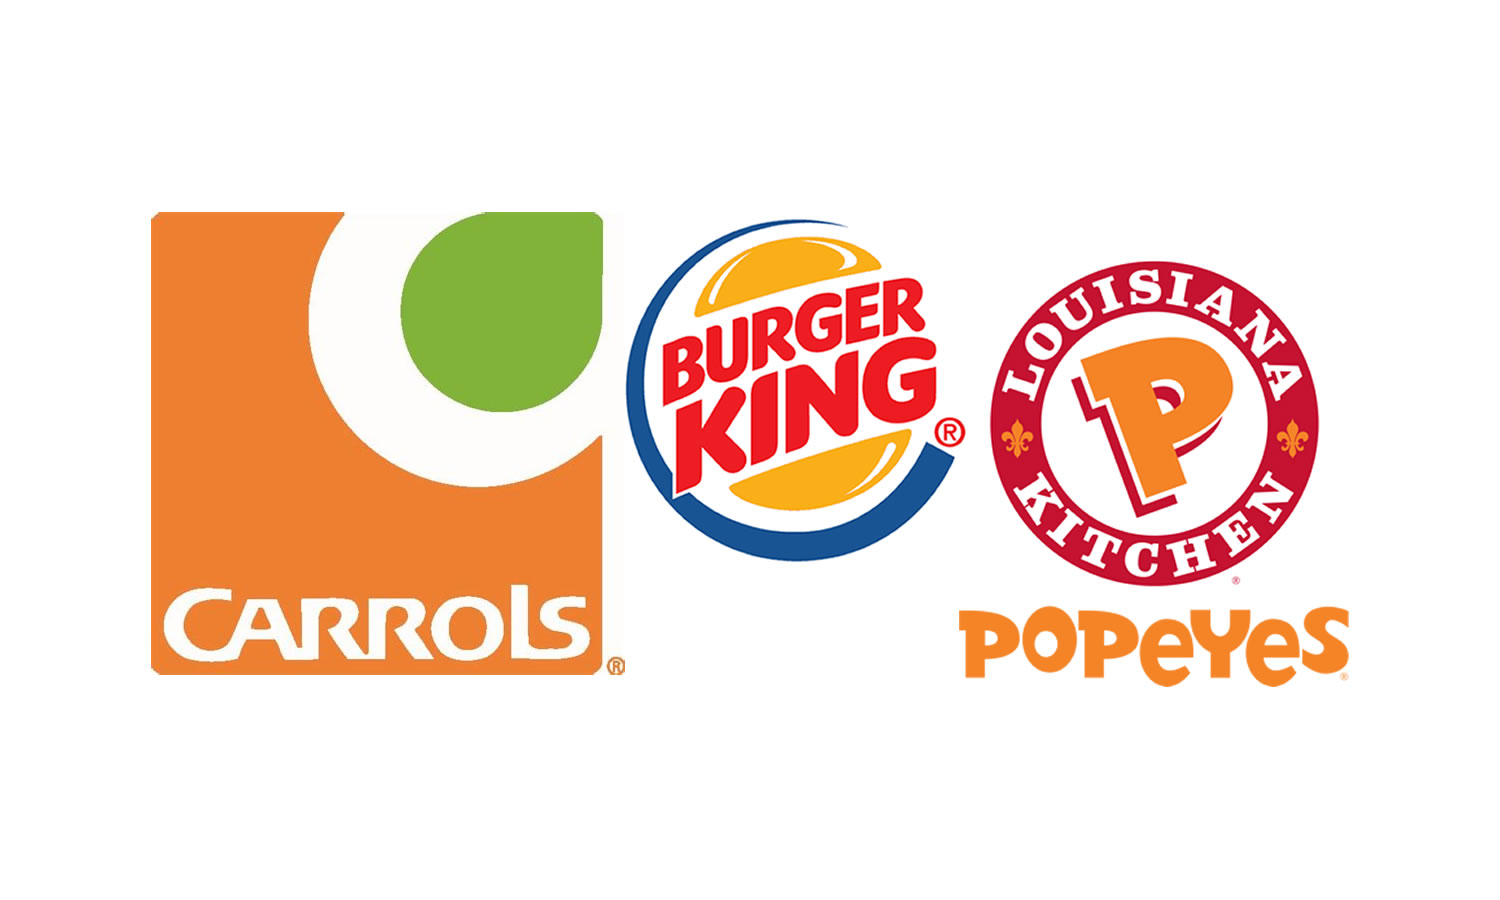 carrols burger king popeyes logos2